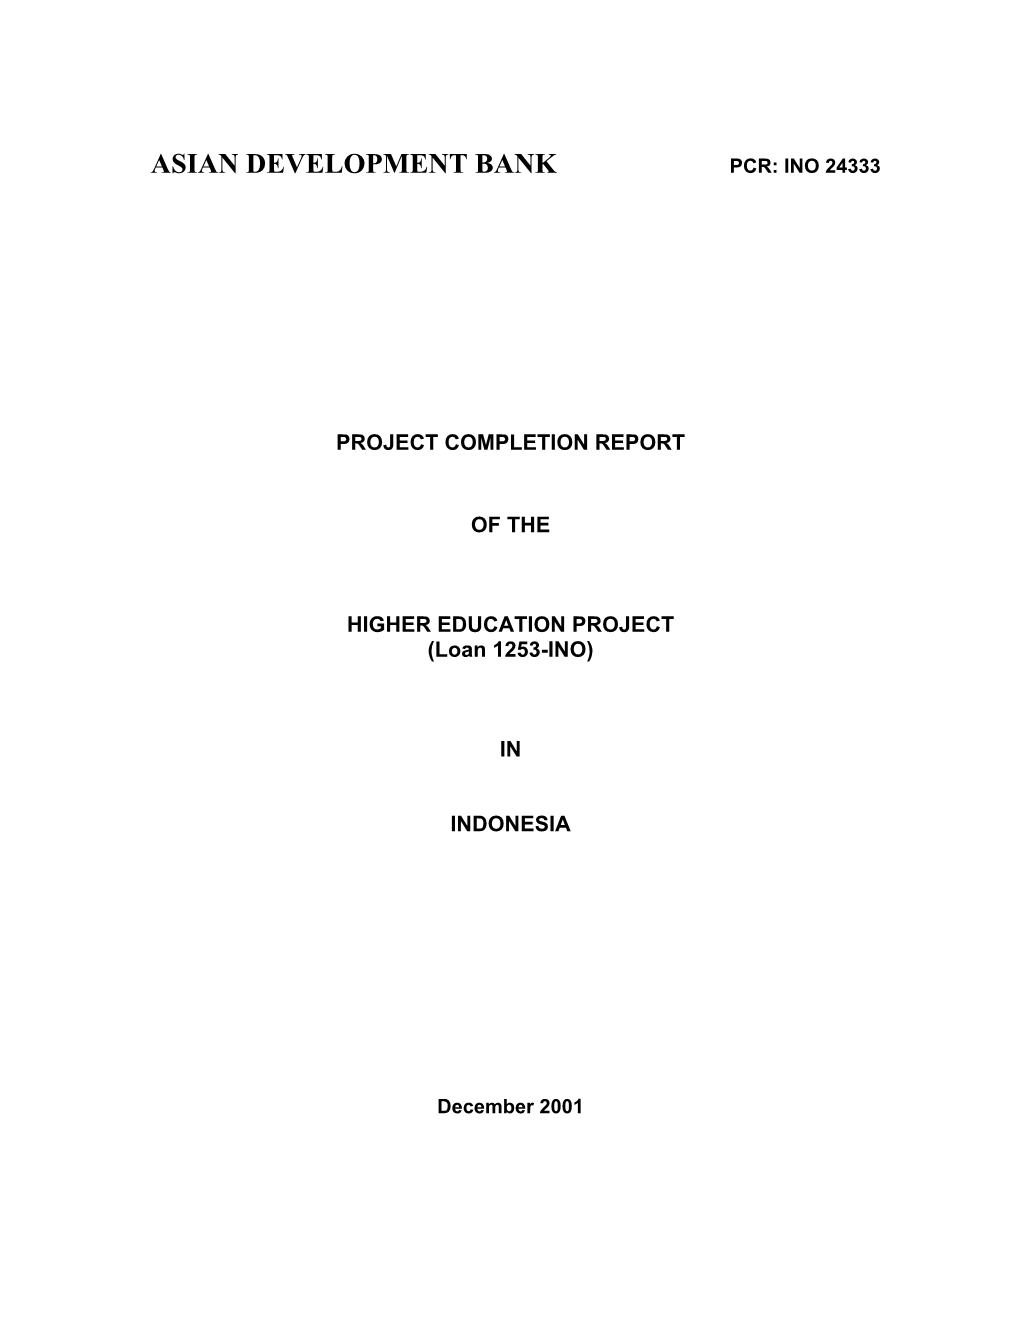 Asian Development Bank Pcr: Ino 24333